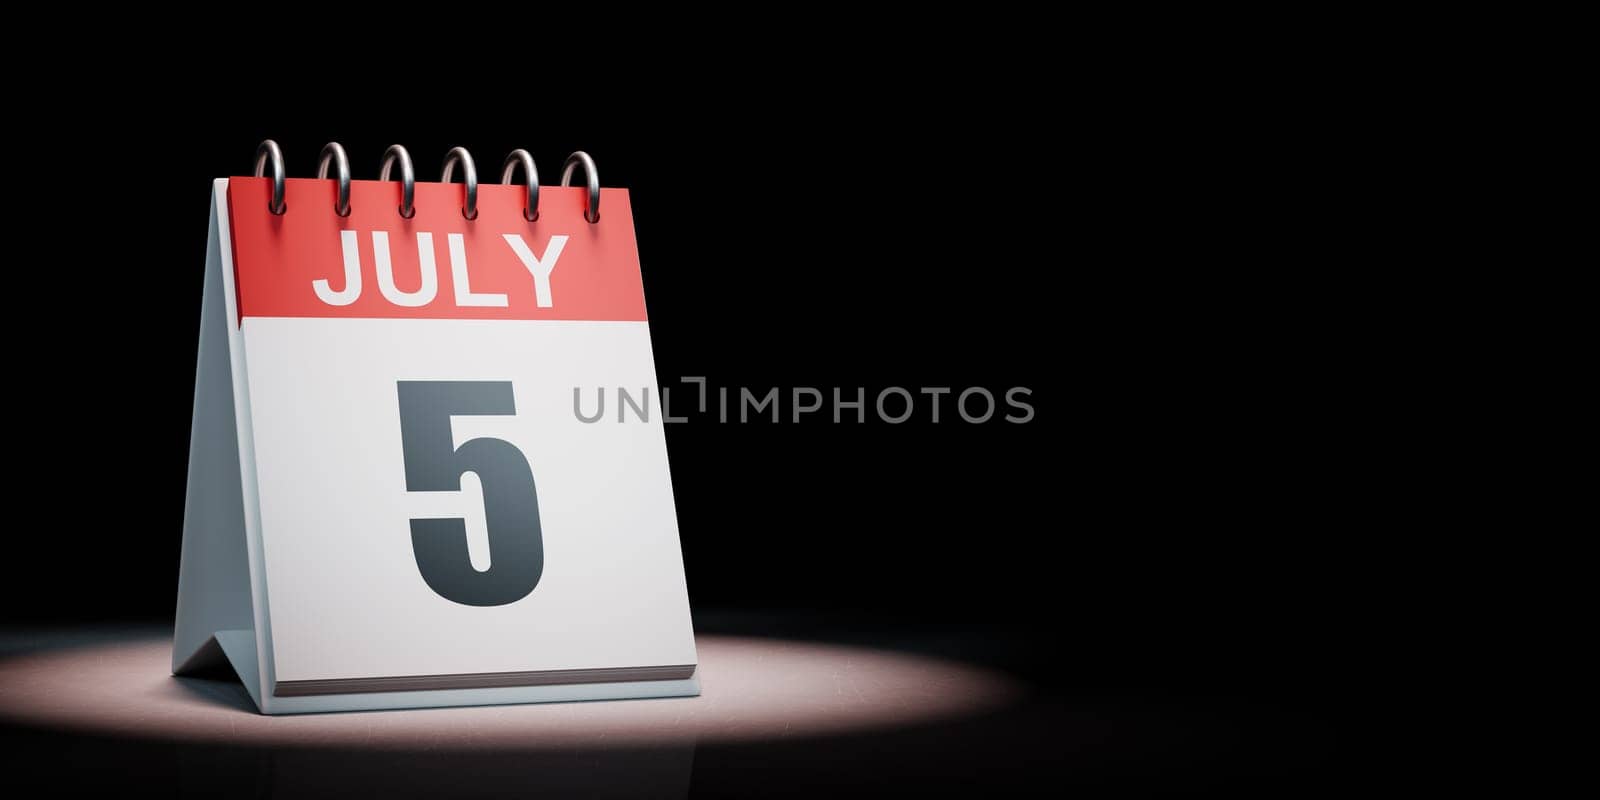 July 5 Calendar Spotlighted on Black Background by make